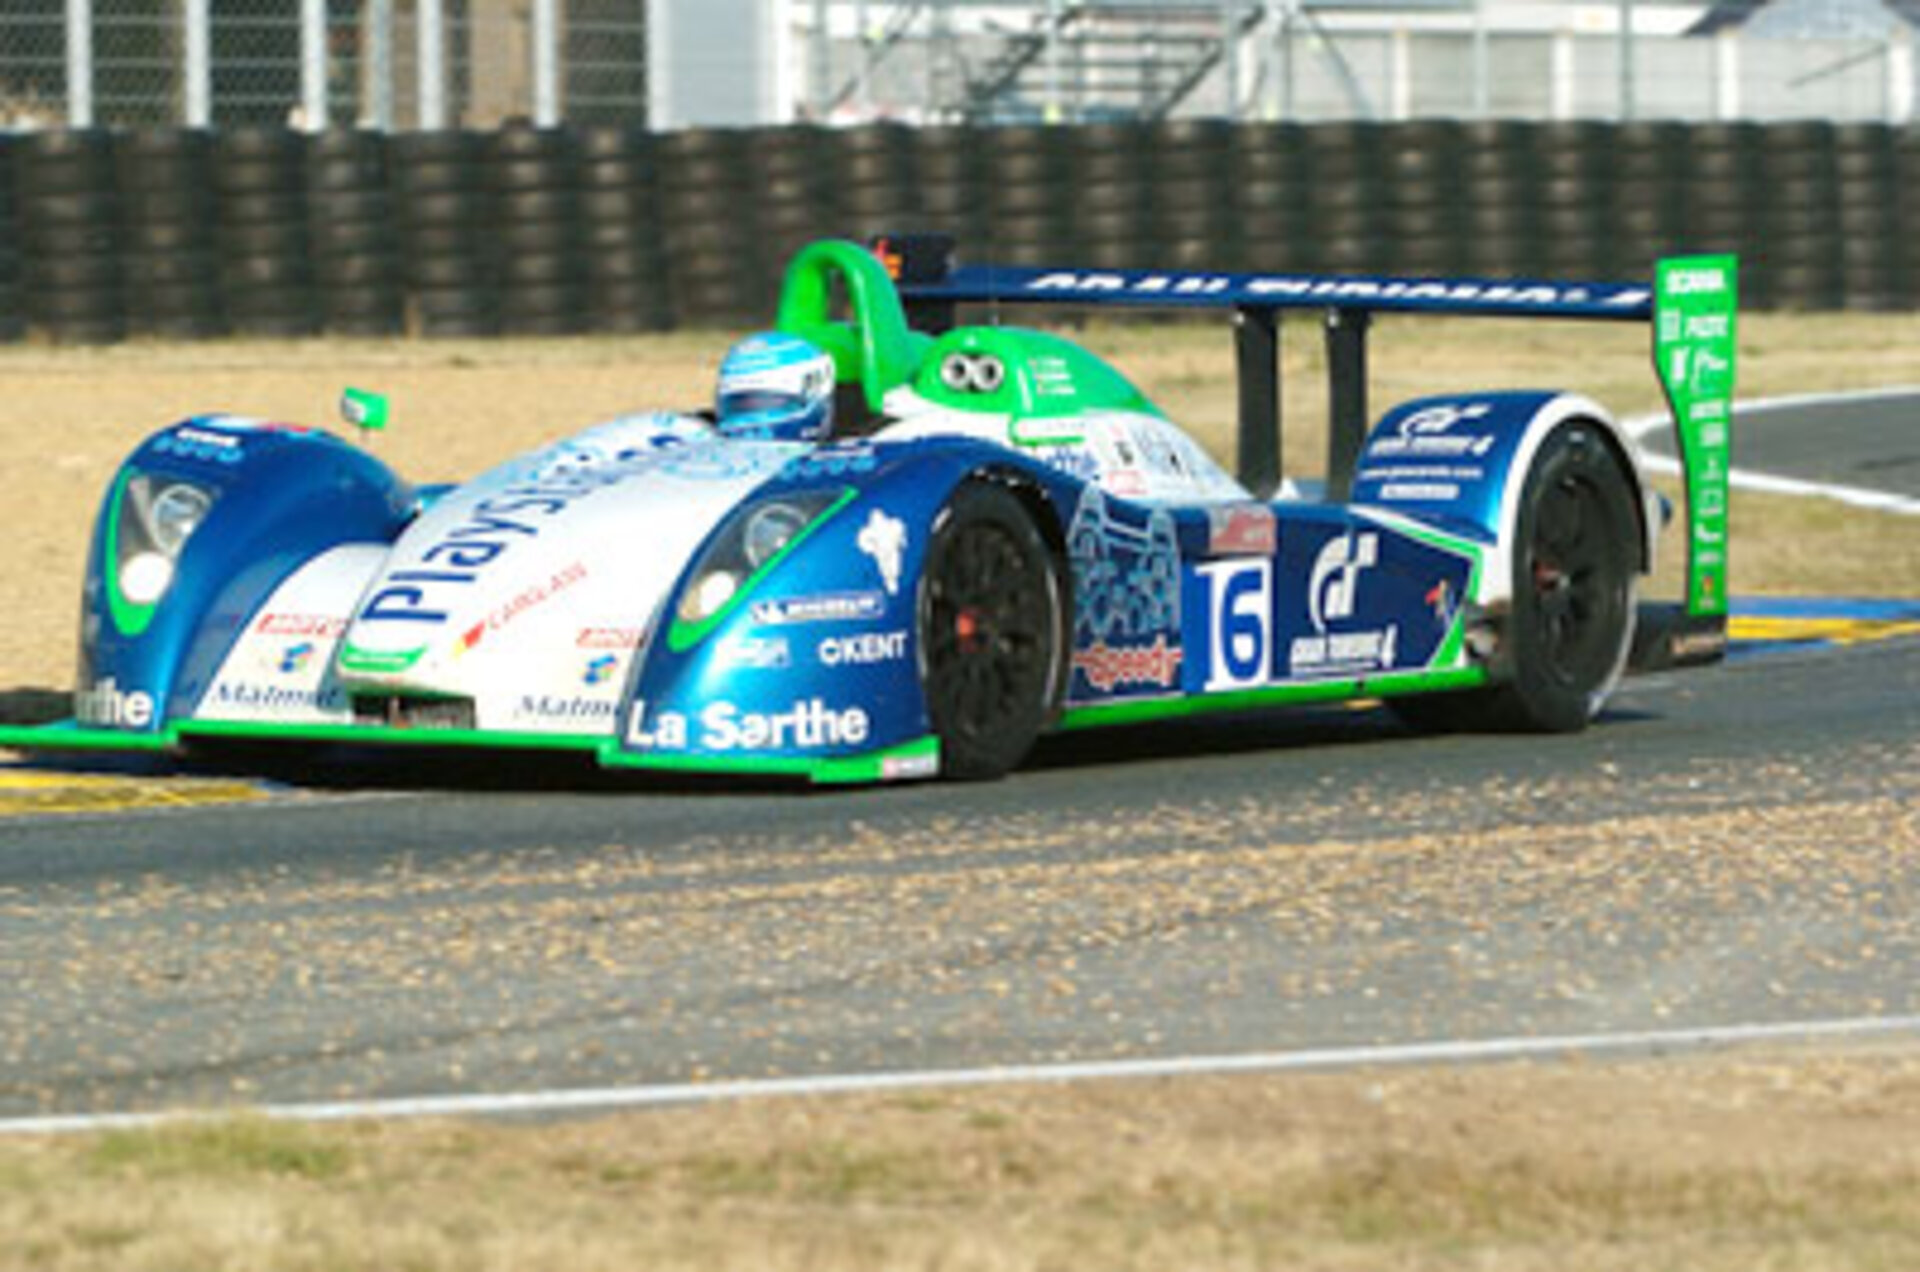 Pescarolo racing car no. 16